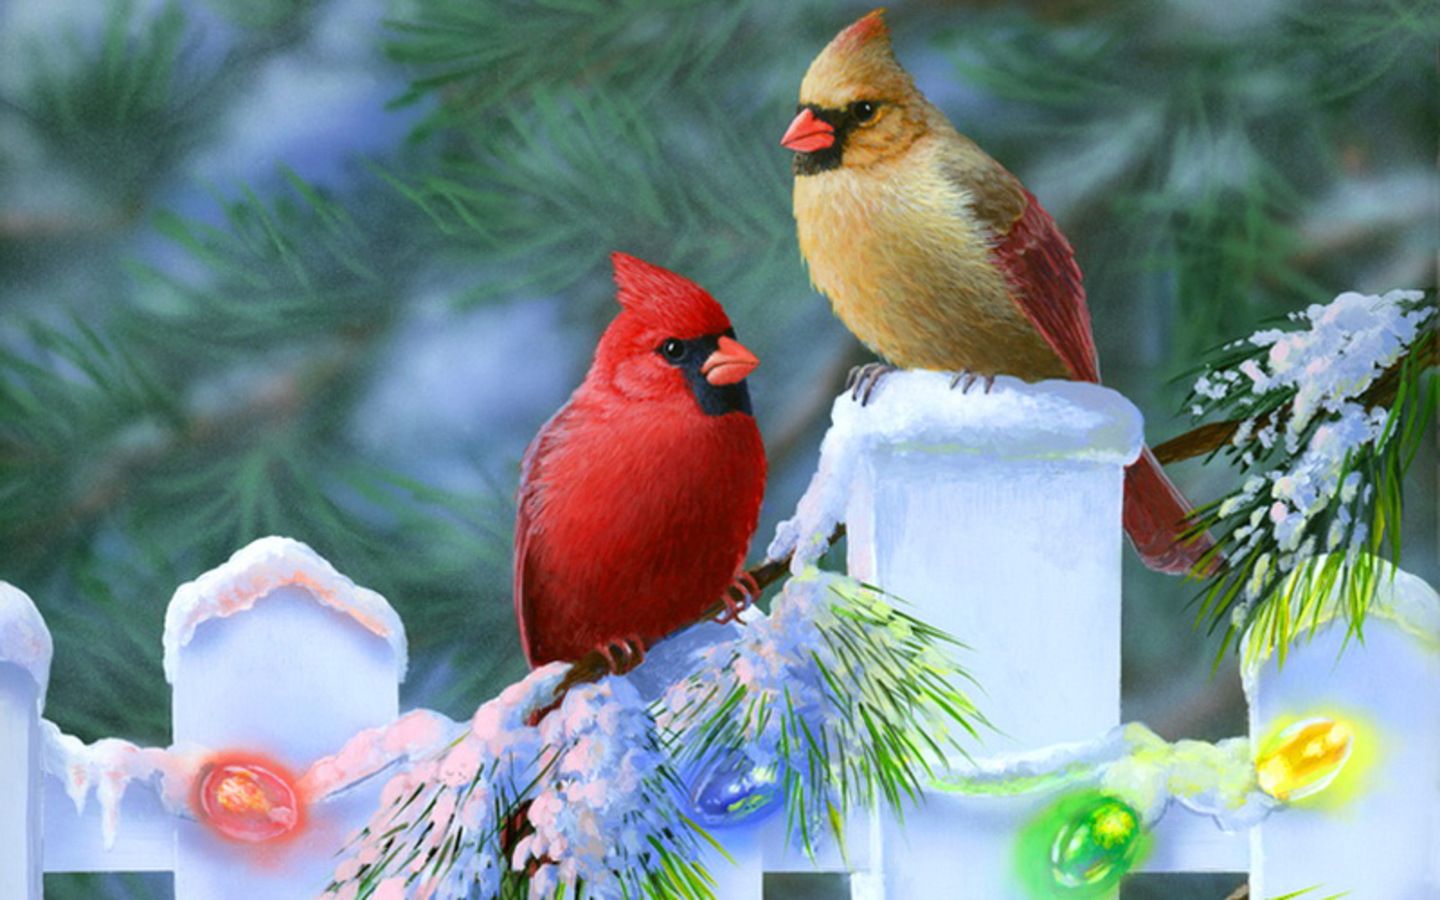 Winter Cardinal Bird Wallpaper Free Download 3872 - HD Wallpapers Site